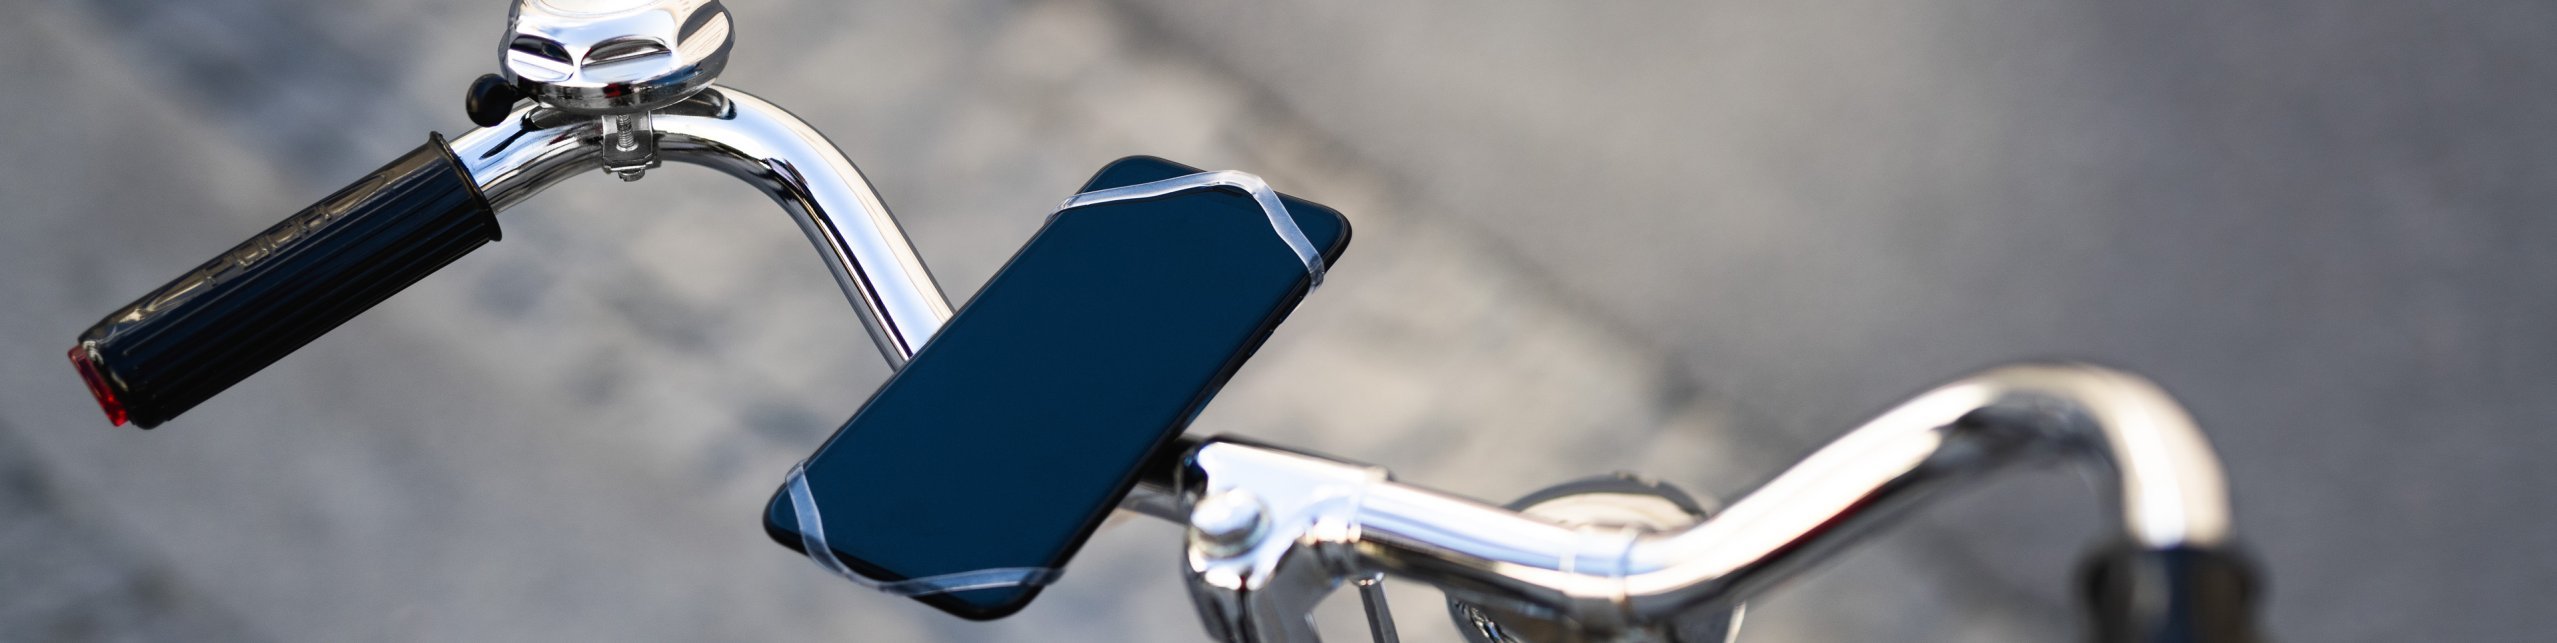 Bike_Citizens_finn_Smartphonehalterung_Fahrrad_LPHeader_3840x1000.jpg